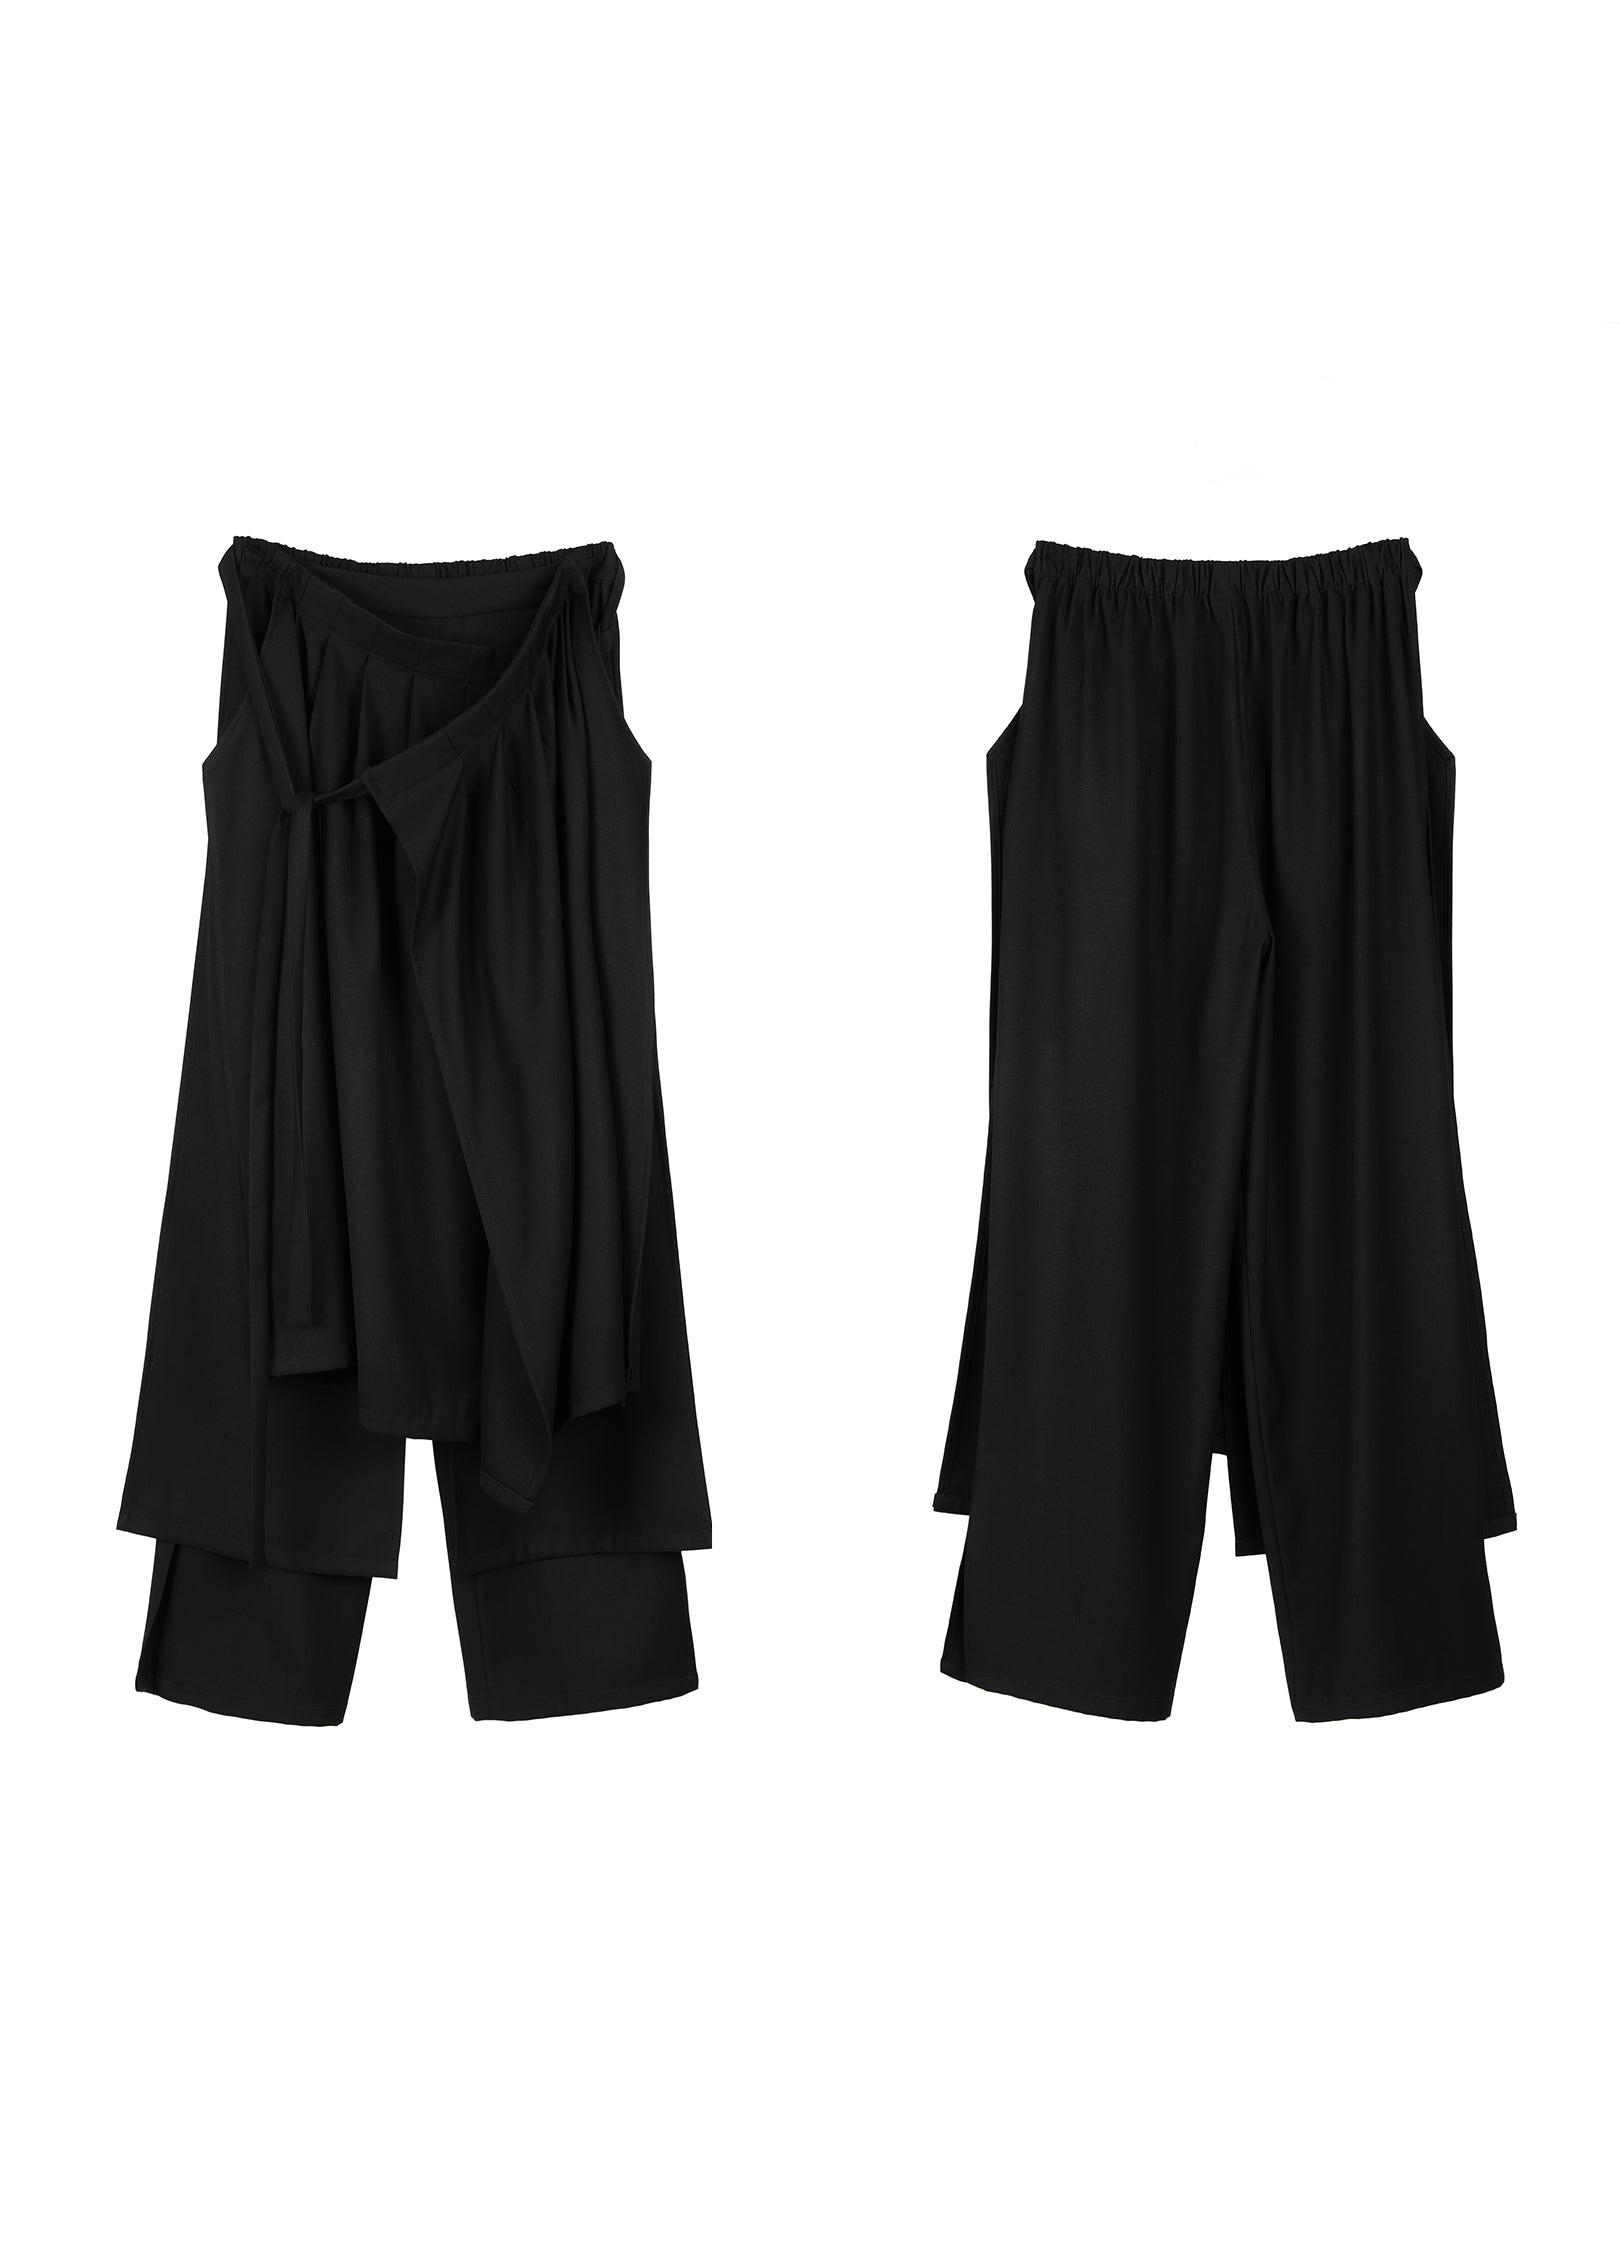 Balenciaga Black layered trousers | TheDoubleF